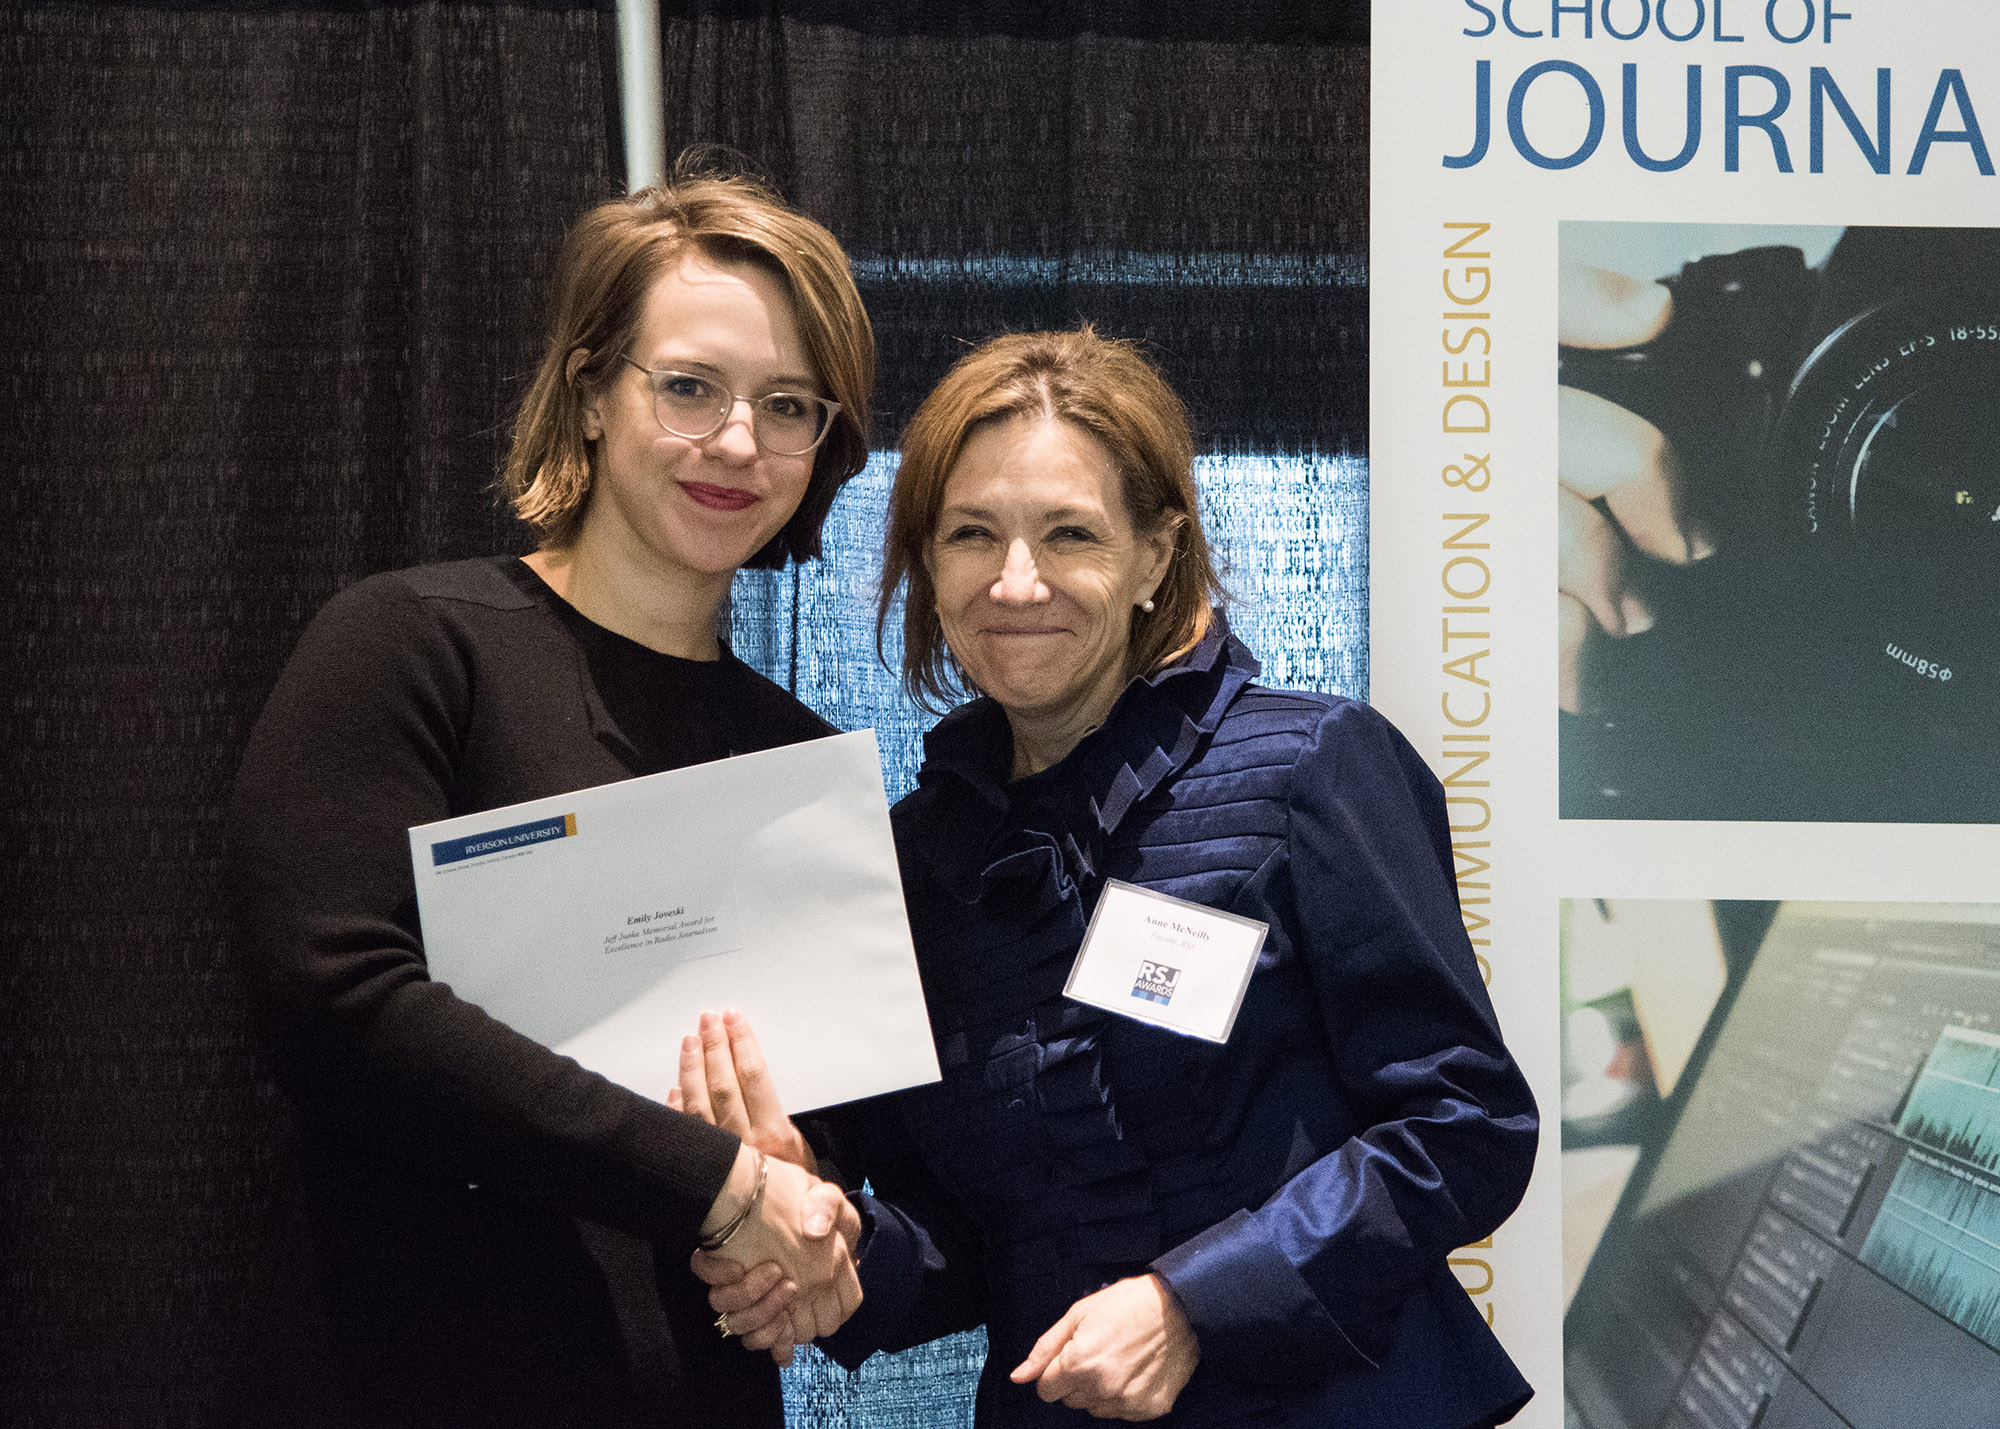 2016 winner Emily Joveski with Awards committee member Anne McNeilly.